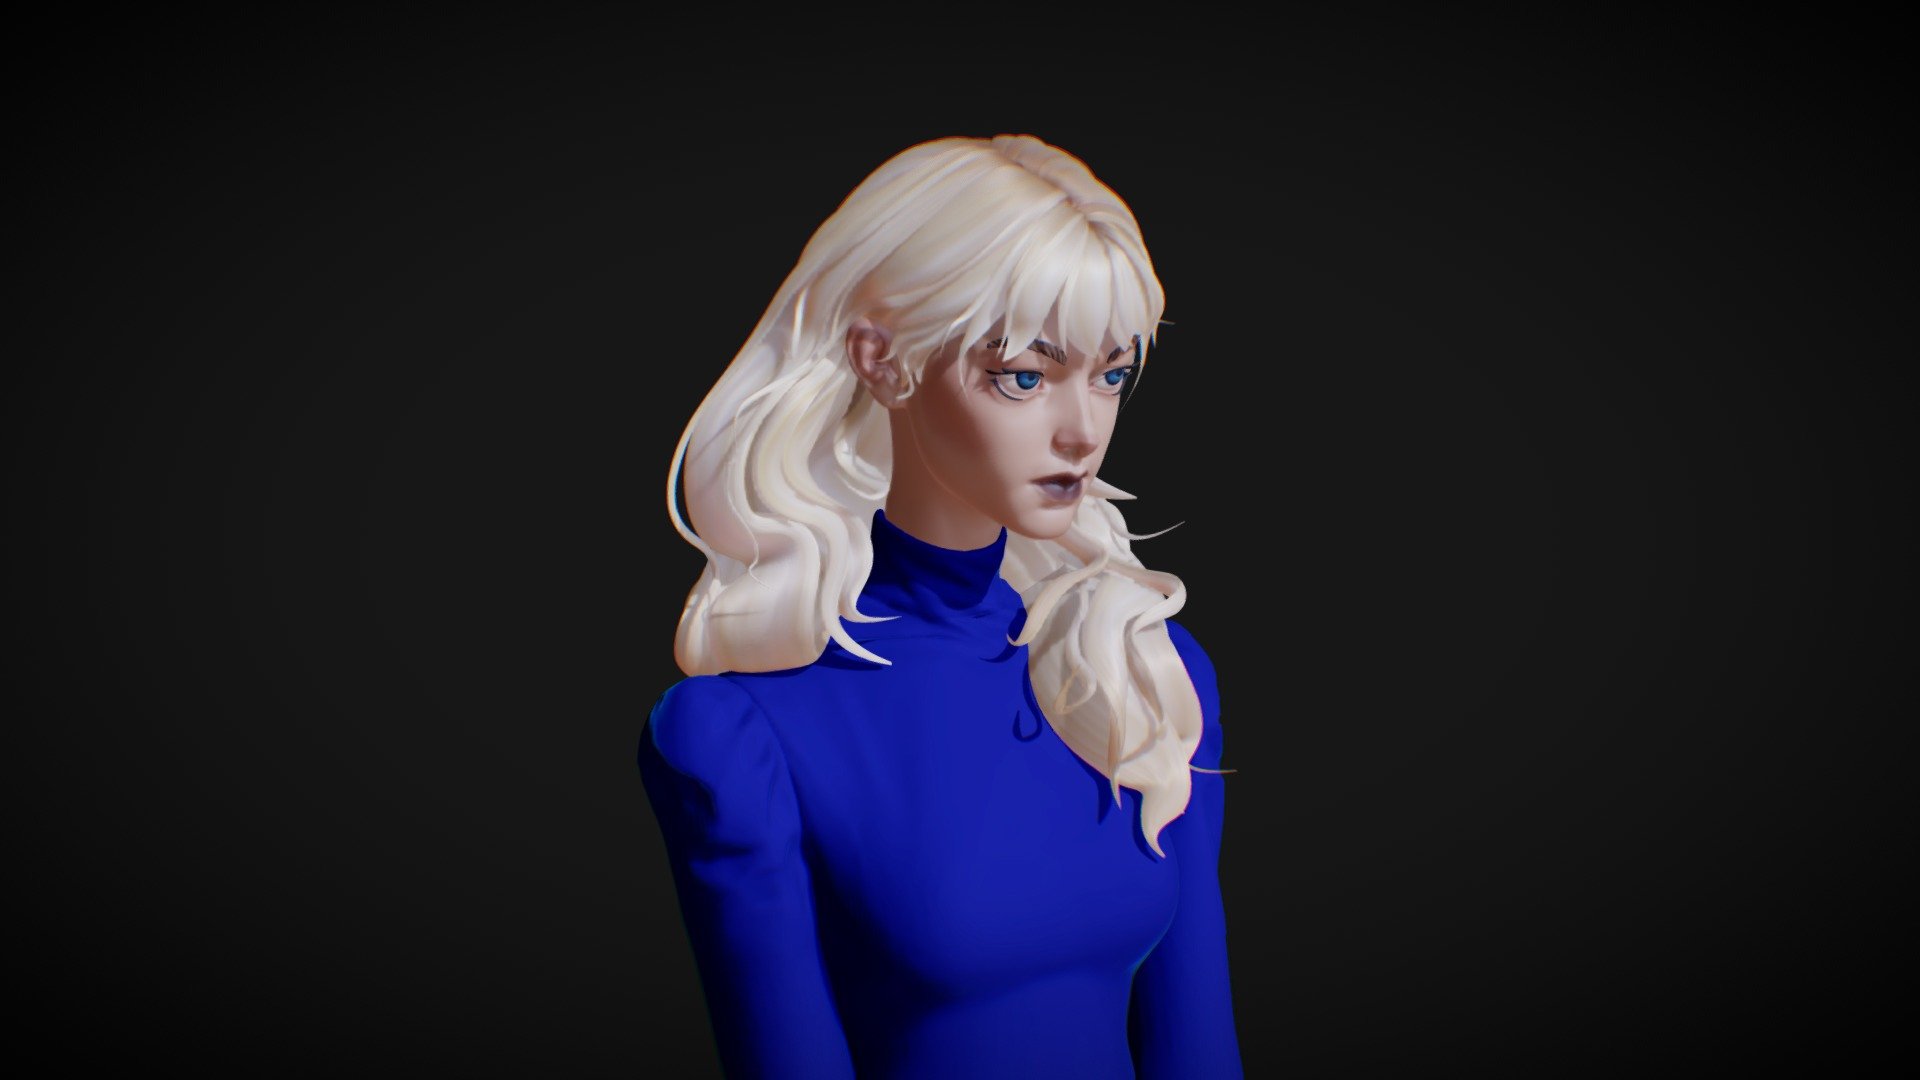 Sculpted model based on a 2d art - Stylized female character - 3D model by Trunips 3d model